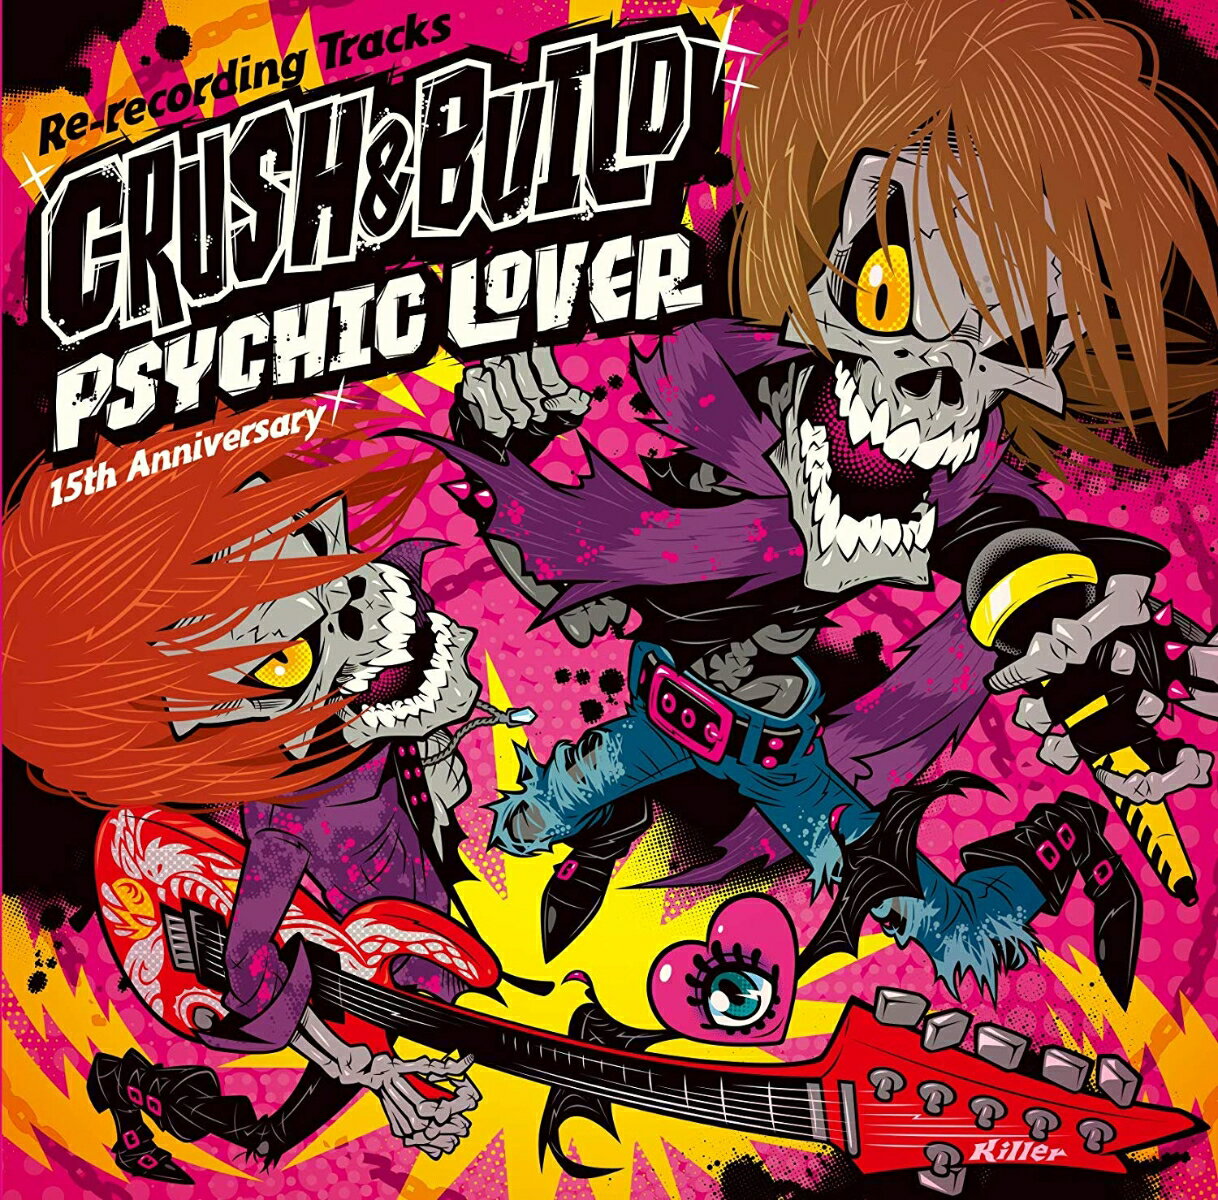 PSYCHIC LOVER 15th Anniversary Re-recording Tracks 〜CRUSH & BUILD〜